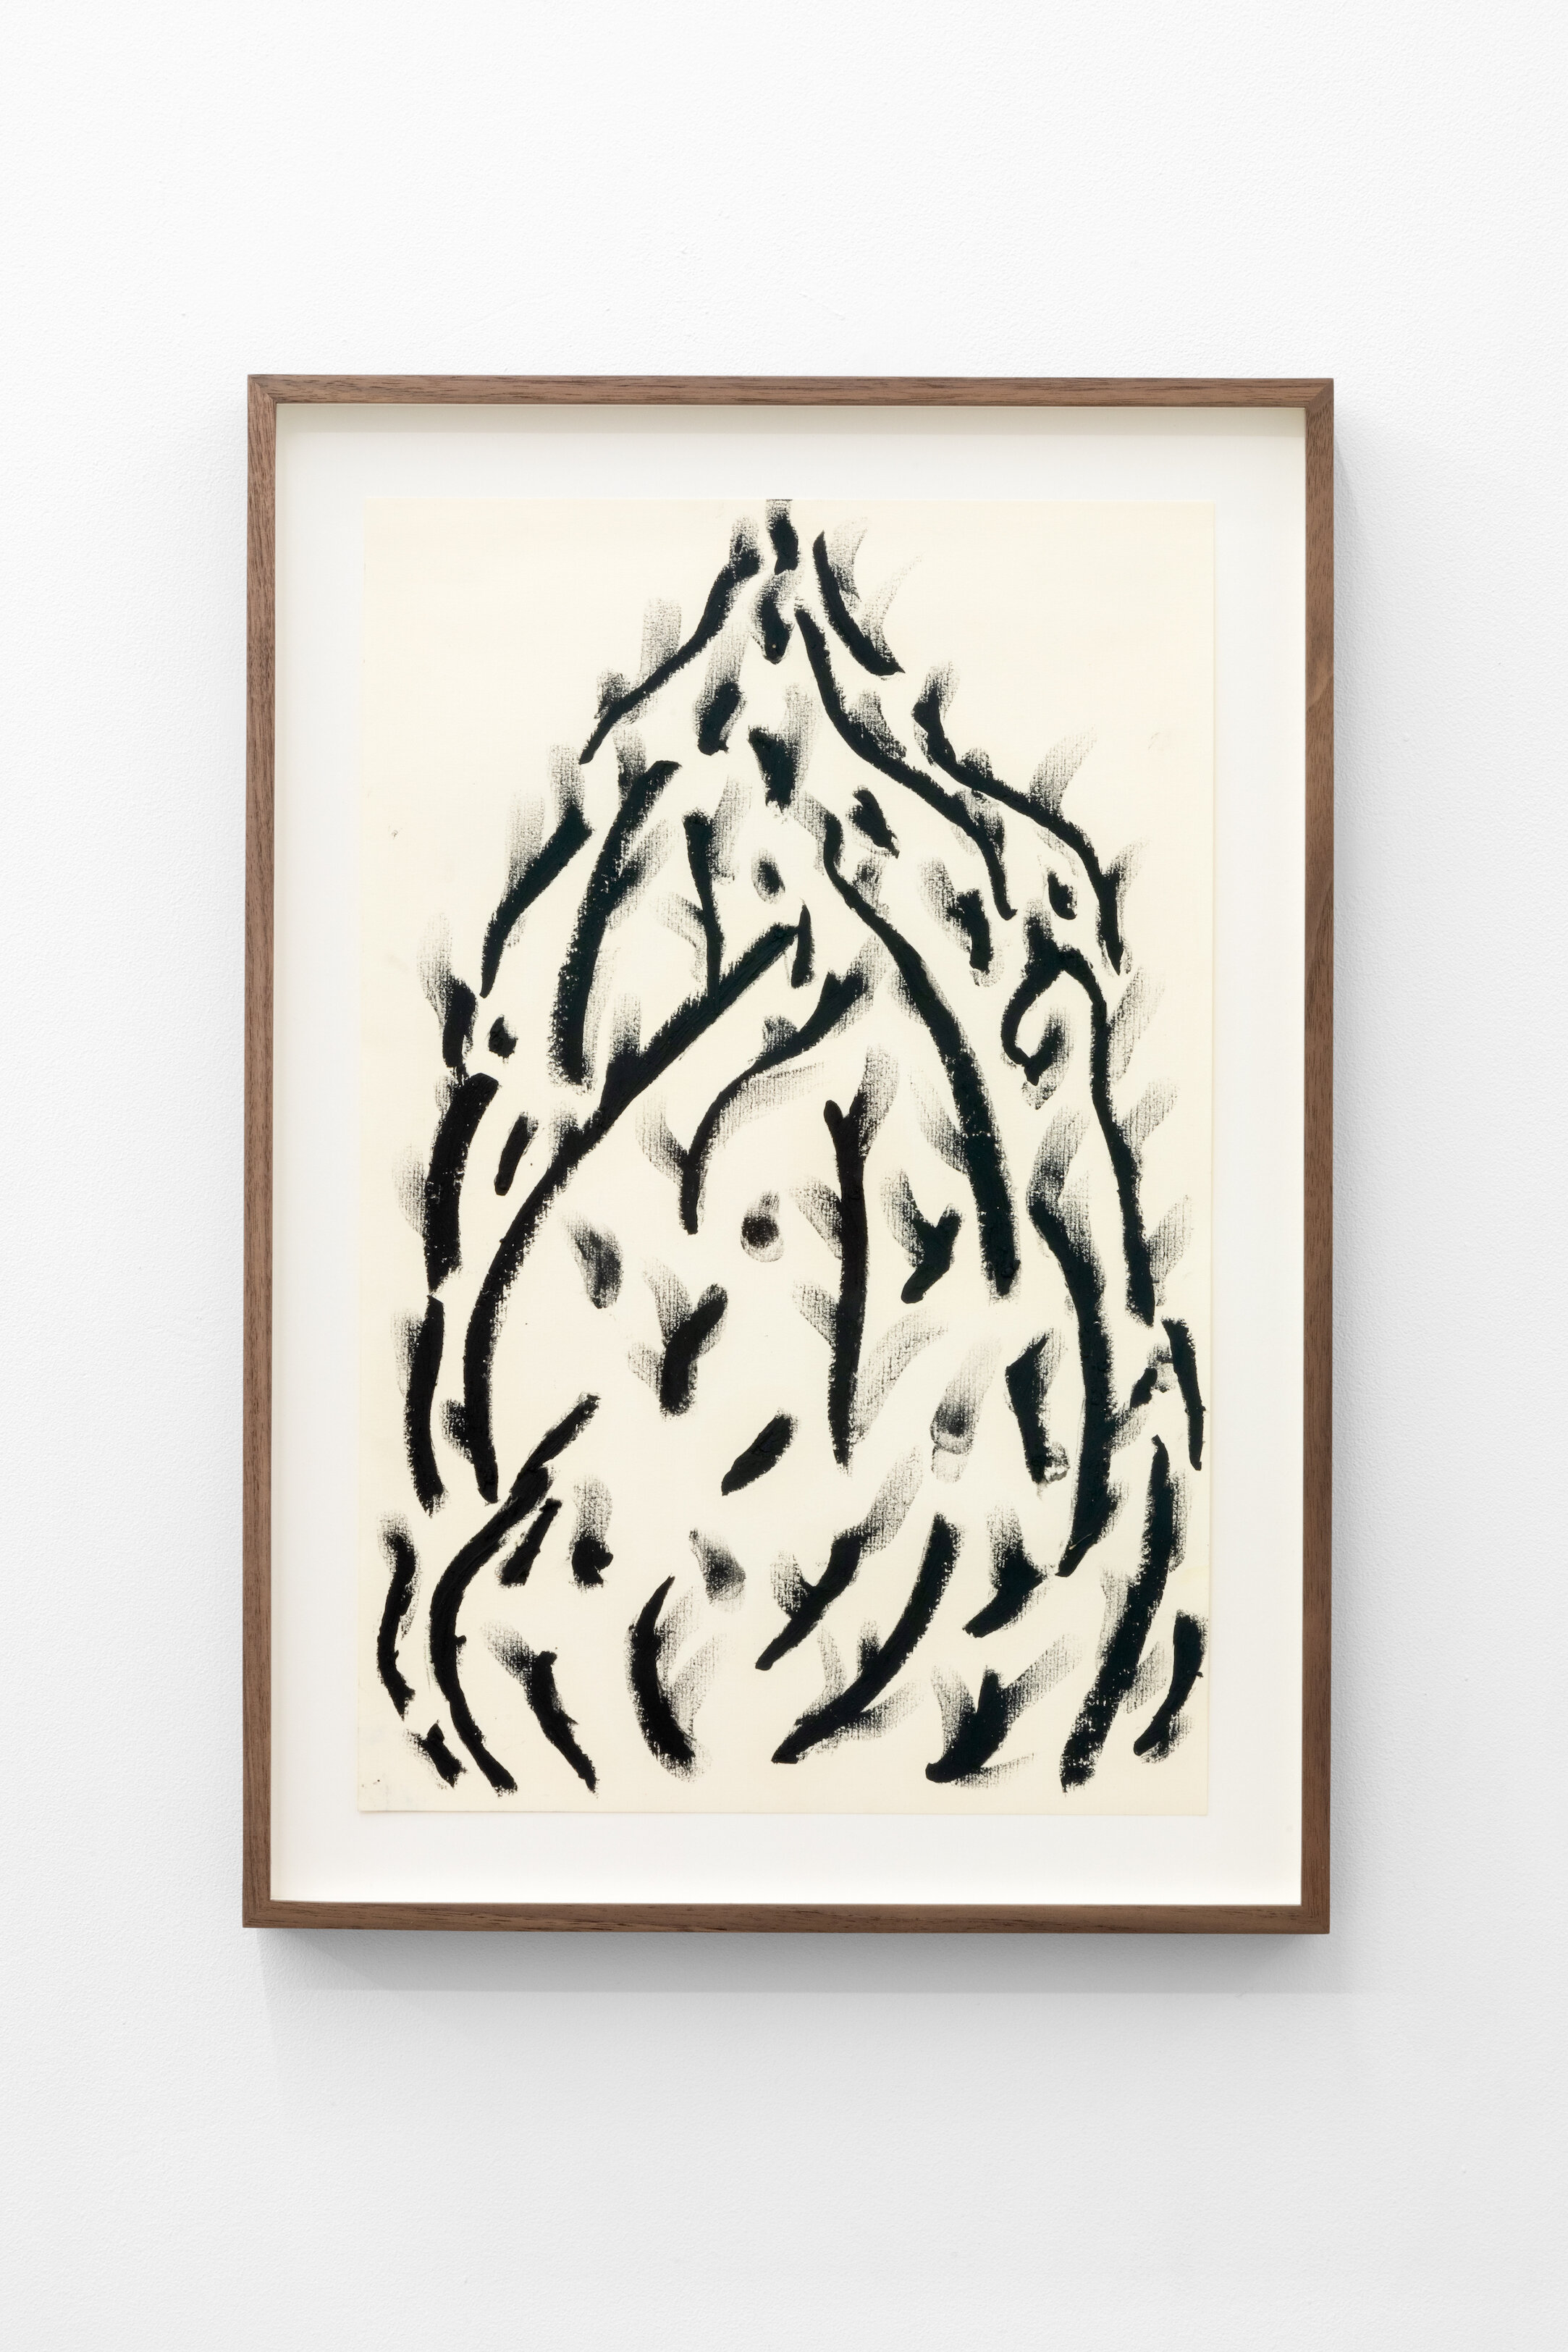  Daniel Rios Rodriguez,  Untitled , 2019, Oil stick on paper, 17 x 11 in 